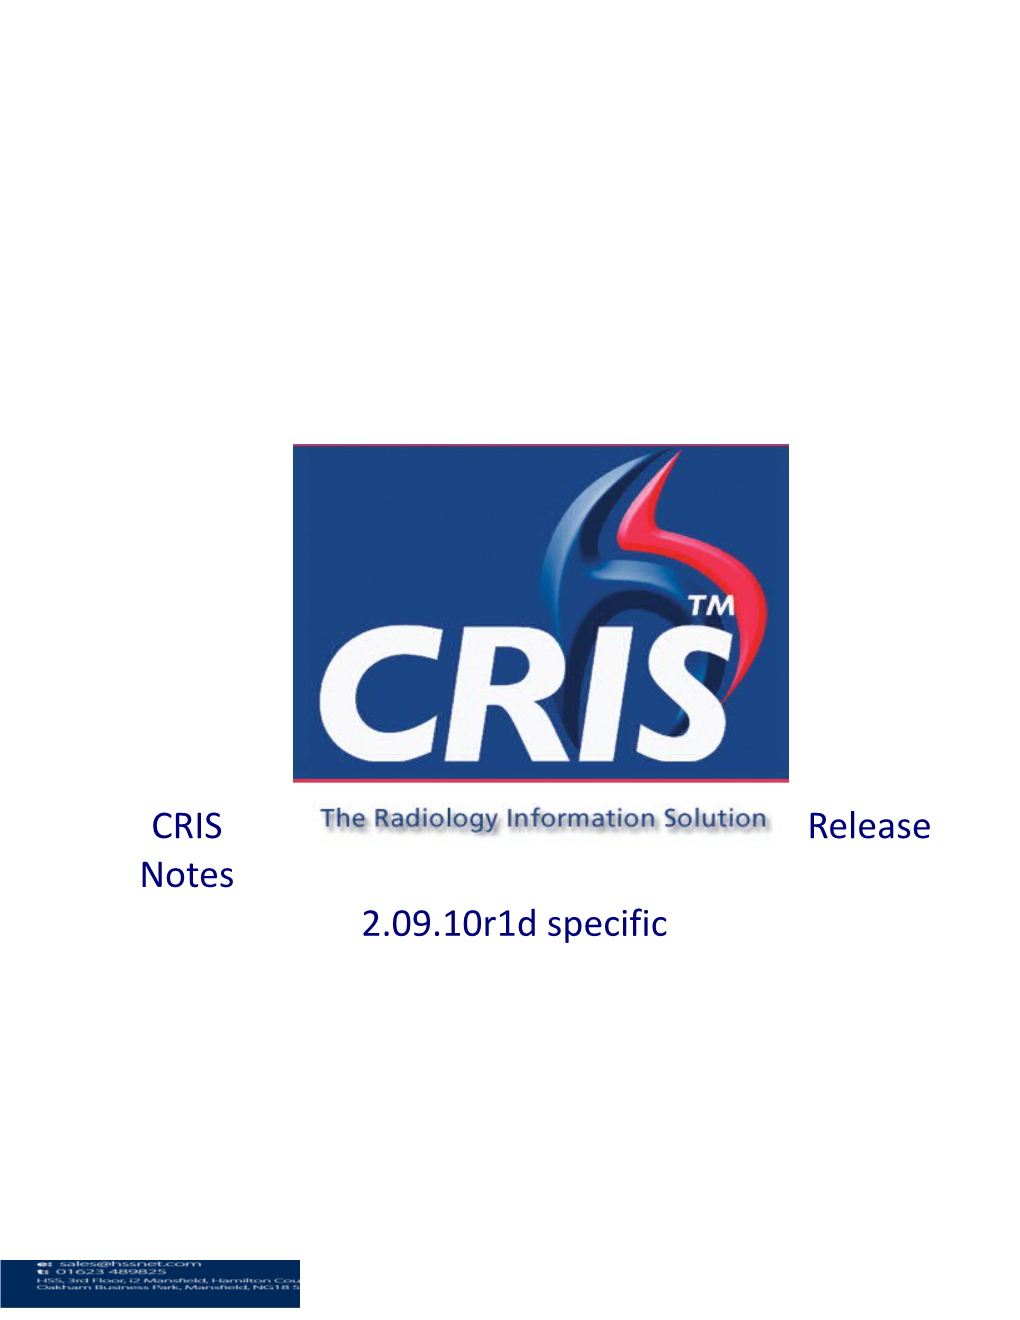 CRIS Release Notes 2.09.10R1d Specific